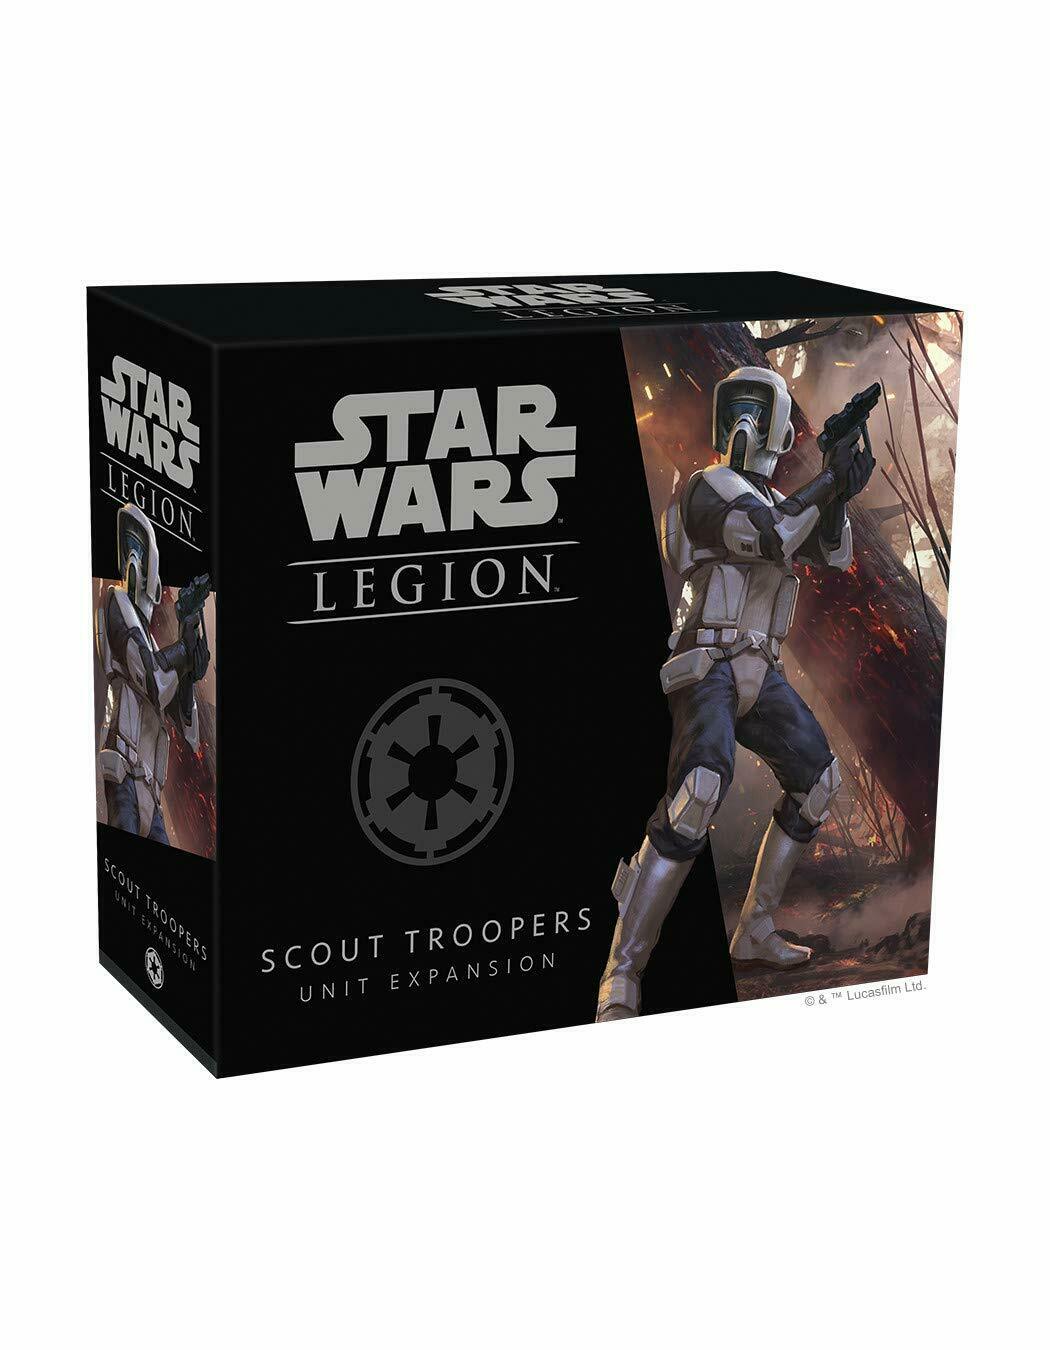 Scout Troopers Unit Expansion Star Wars: Legion Ffg Nib